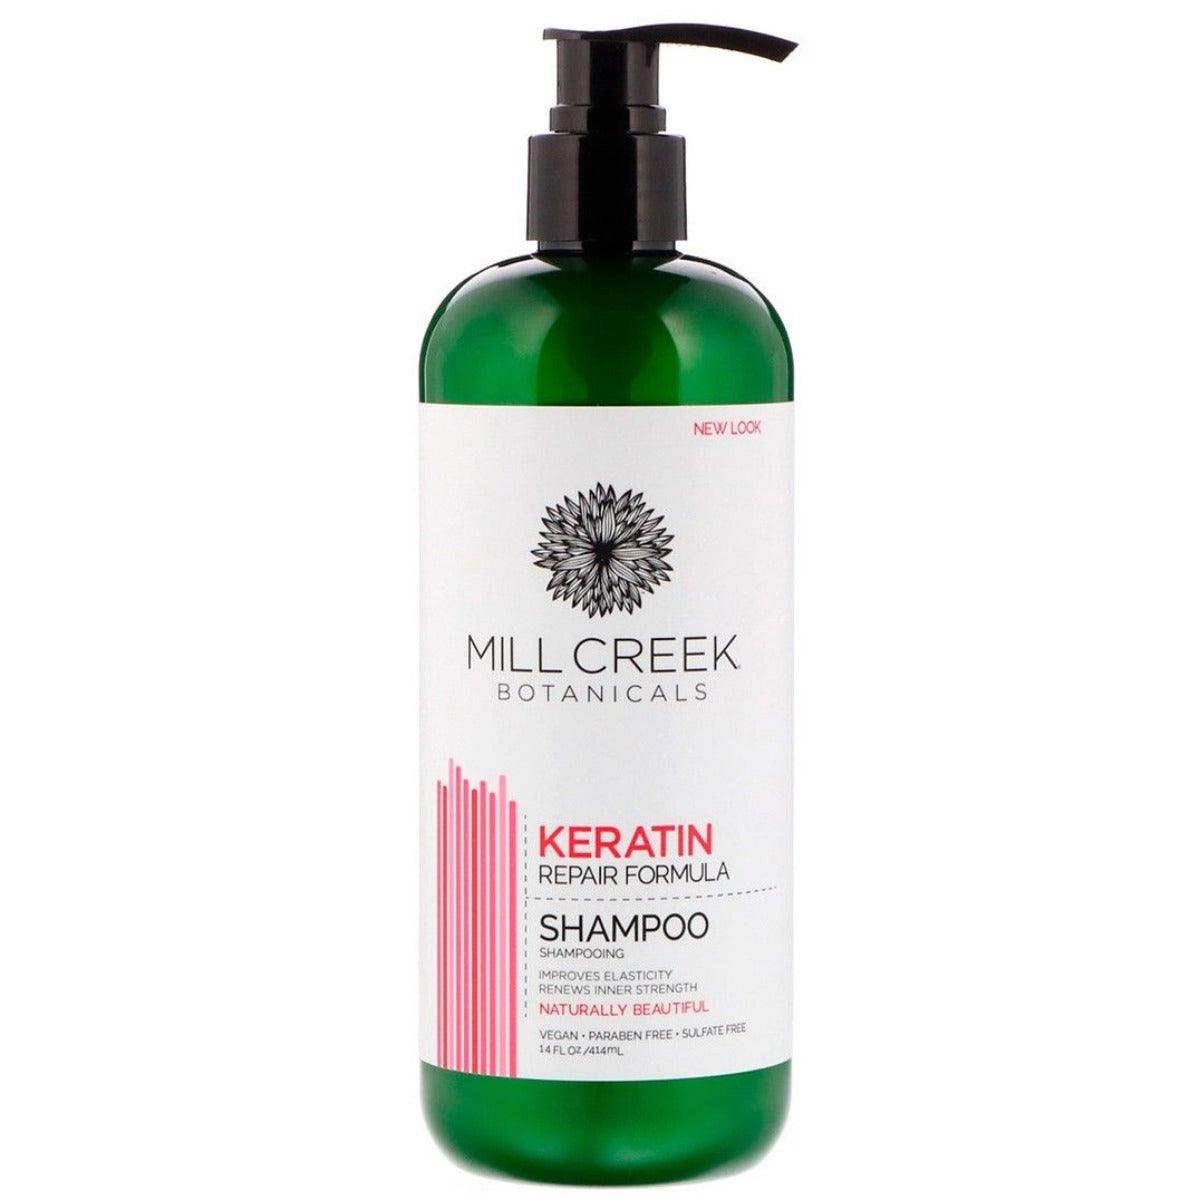 MillCreek Shampoo Keratin 414mL Shampoo at Village Vitamin Store